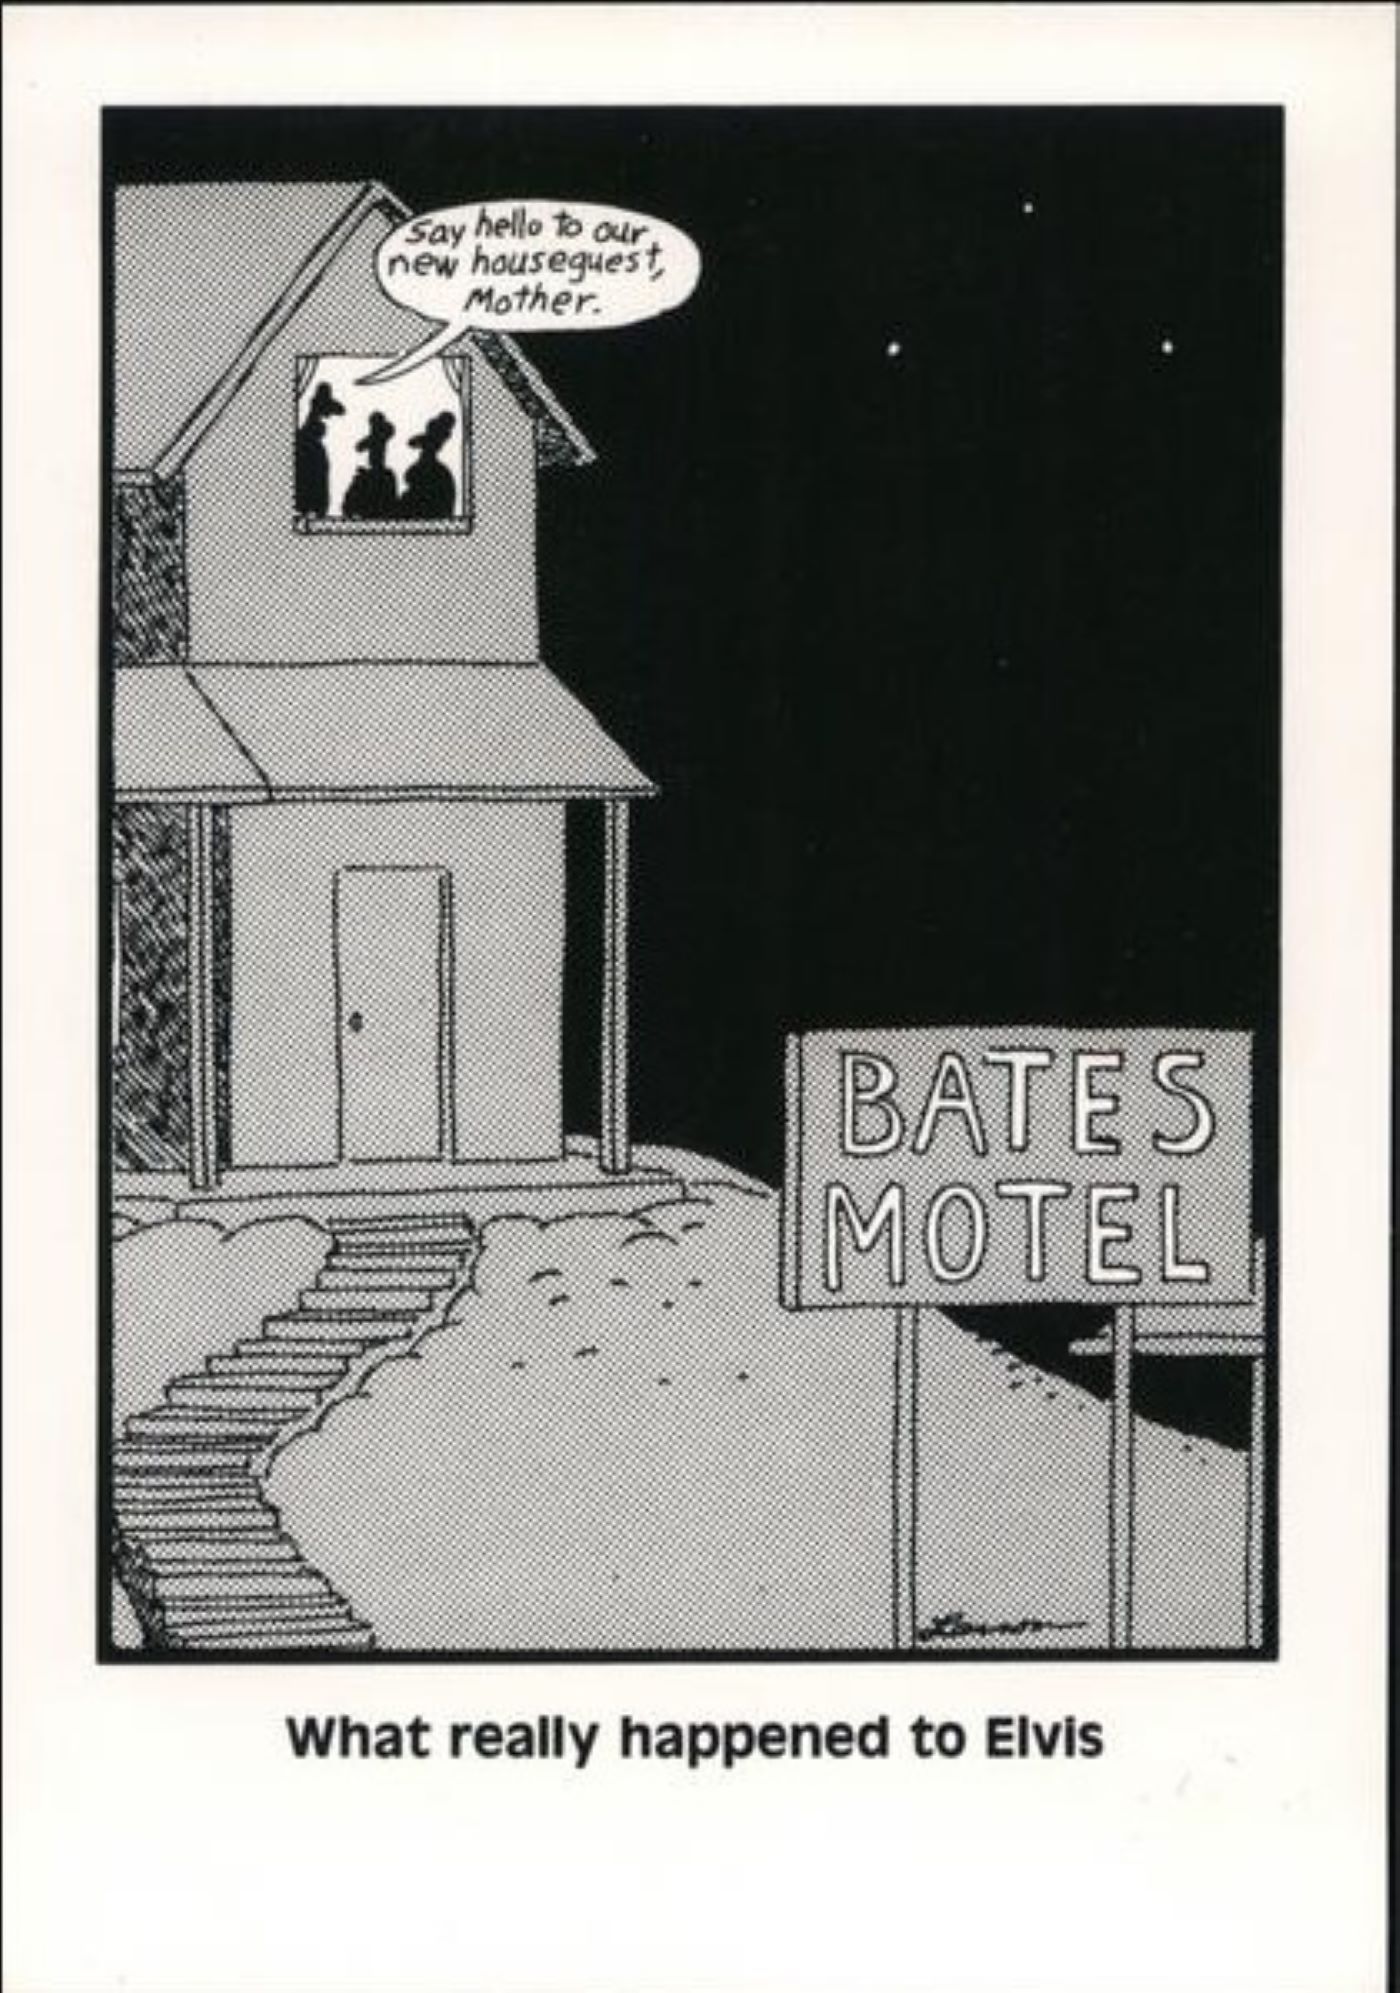 Gary Larson Comic featuring Elvis and Bates Motel